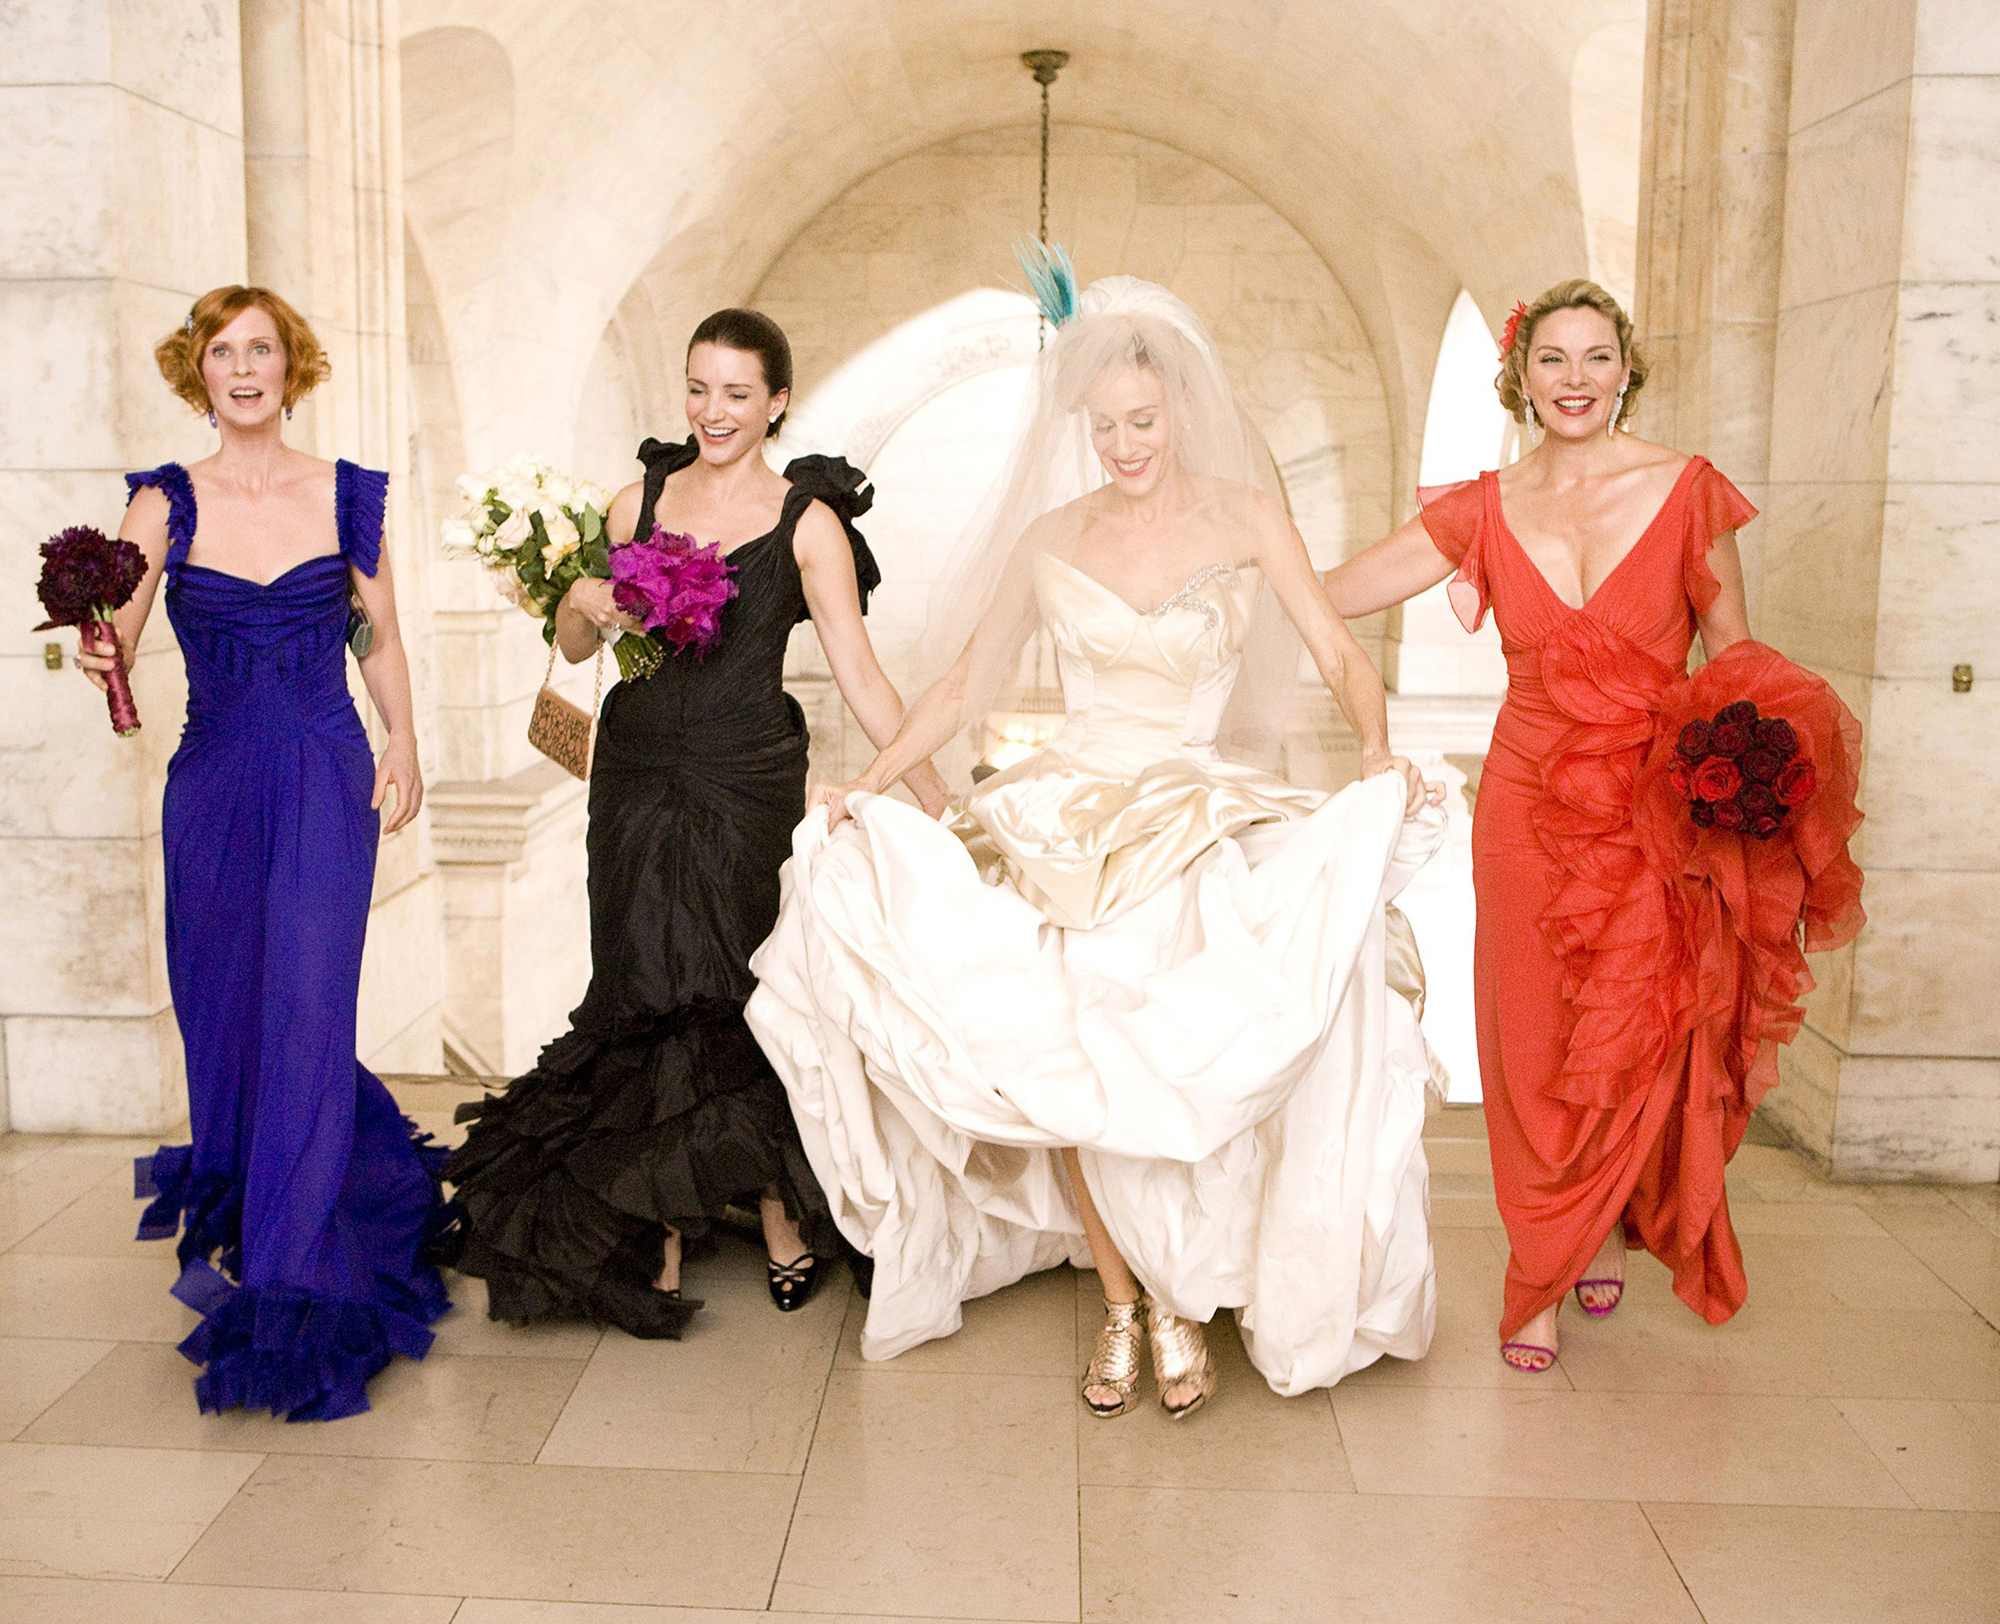 40 Best Celebrity Wedding Dresses - PureWow